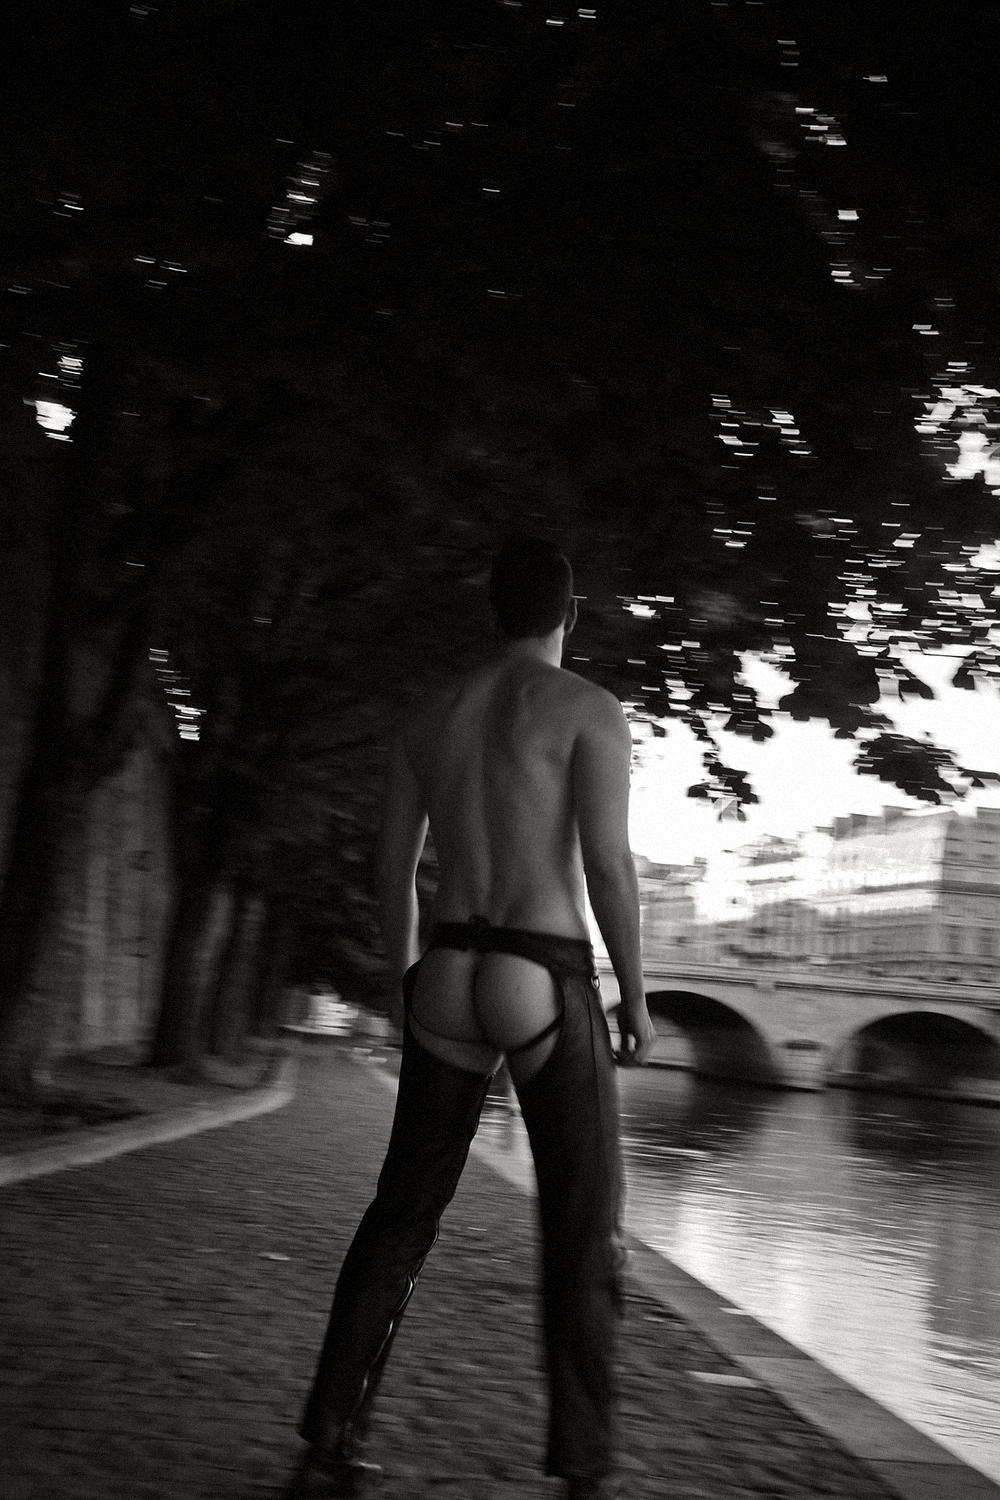 Ricky Cohete Black and White Photograph - Paris. Black and White Limited Edition Photograph